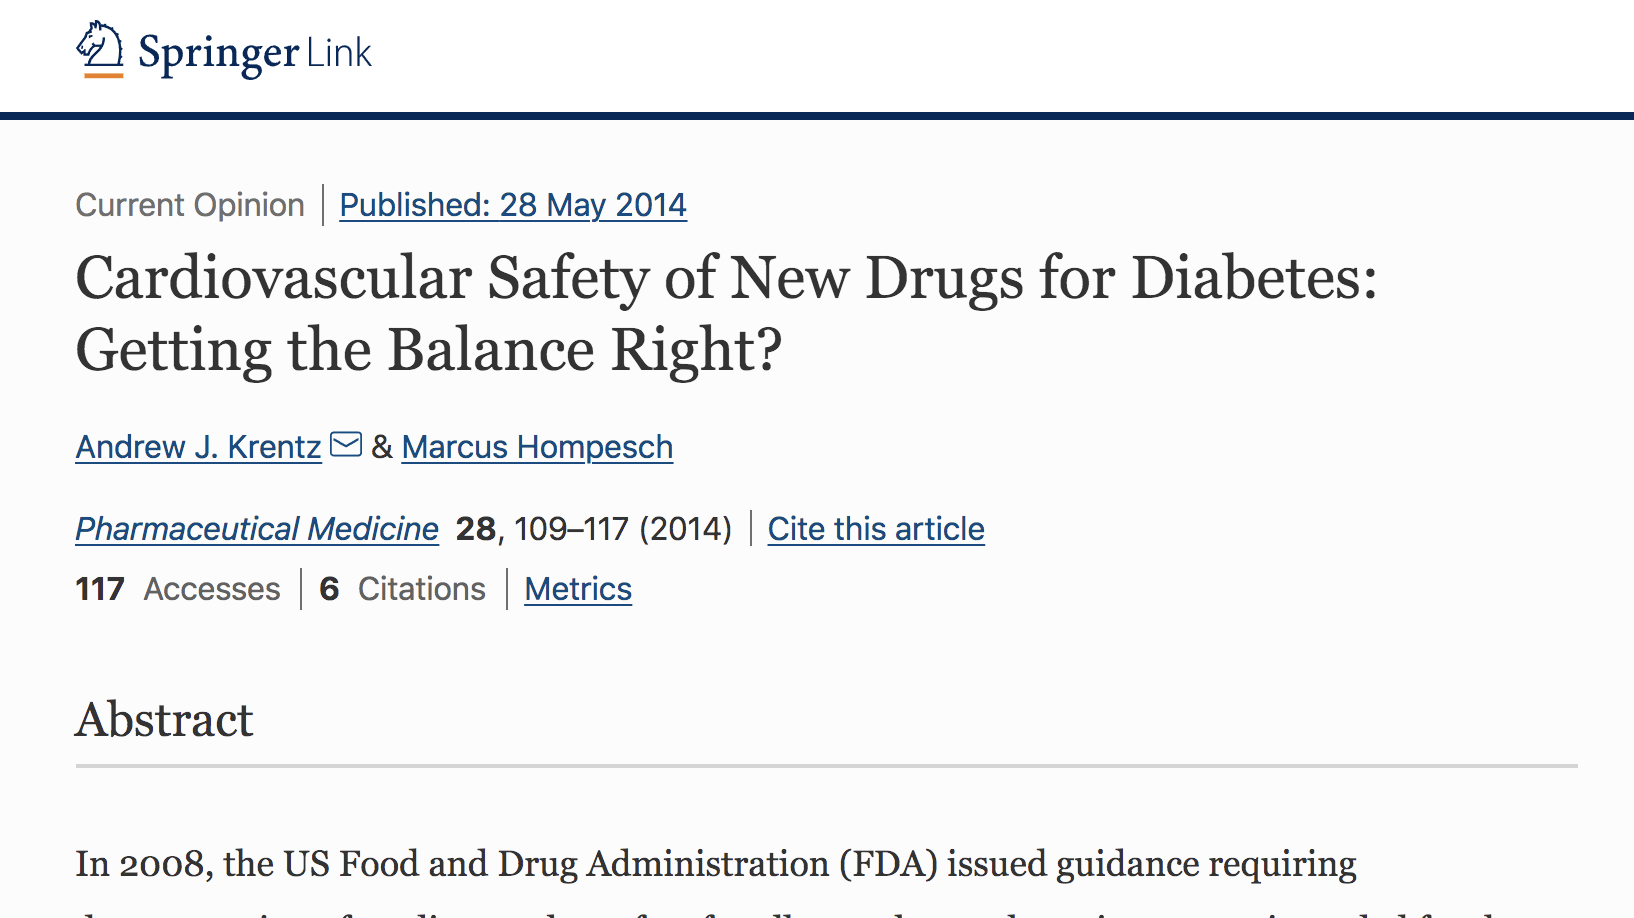 Translational Research Methods for Diabetes, Obesity and Cardiometabolic Drug Development. thumbnail